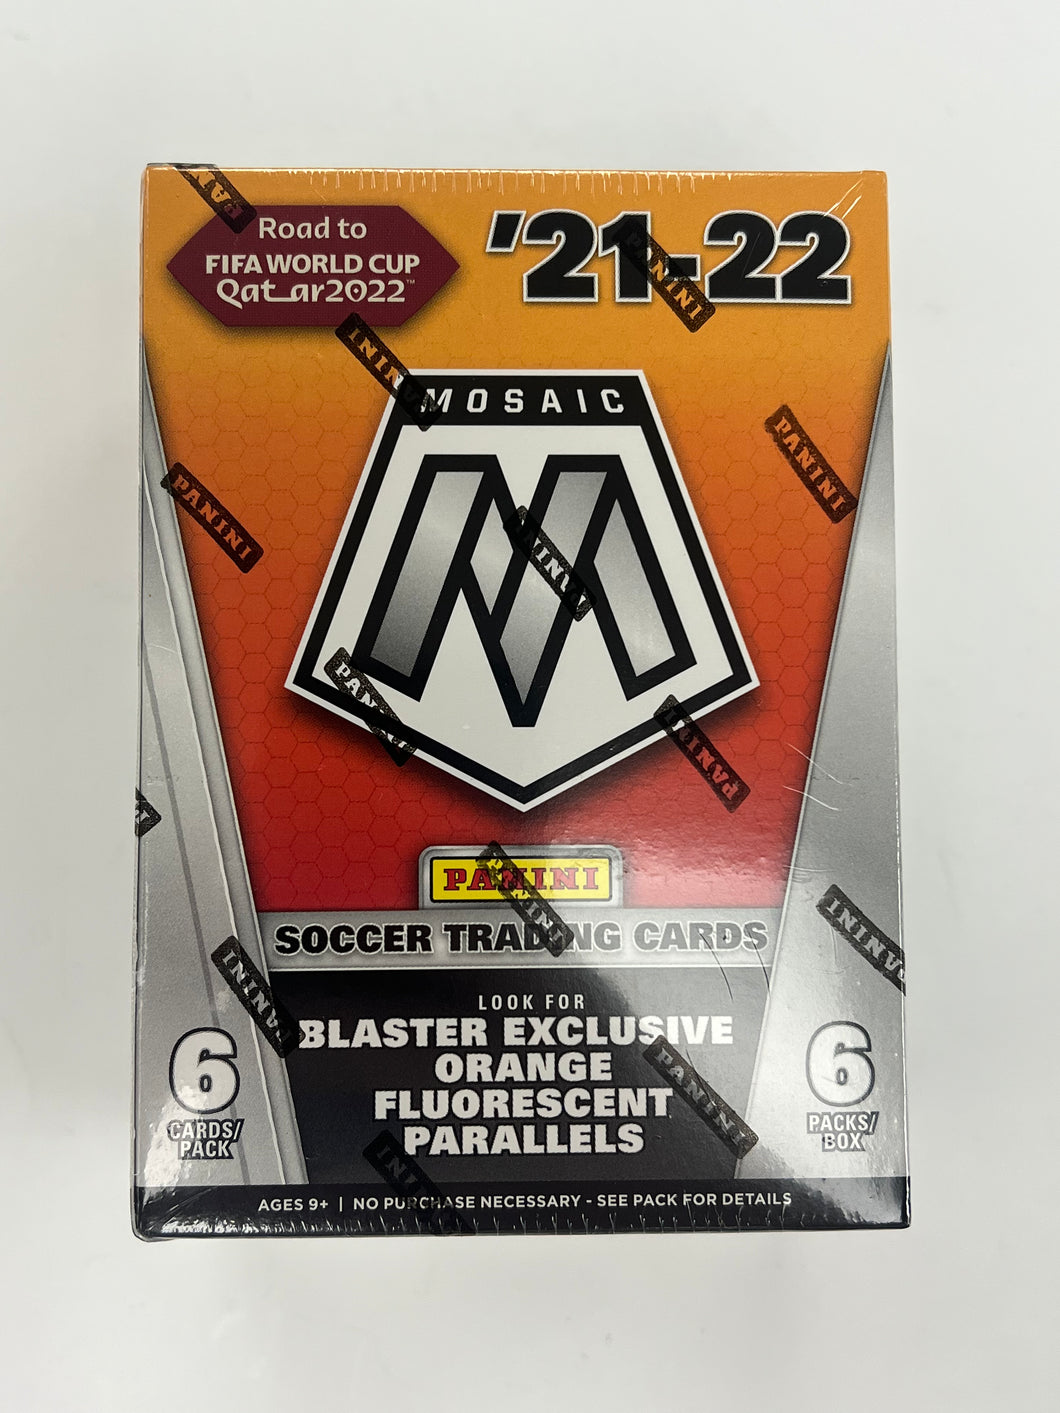 21-22 Mosaic Soccer World Cup Blaster